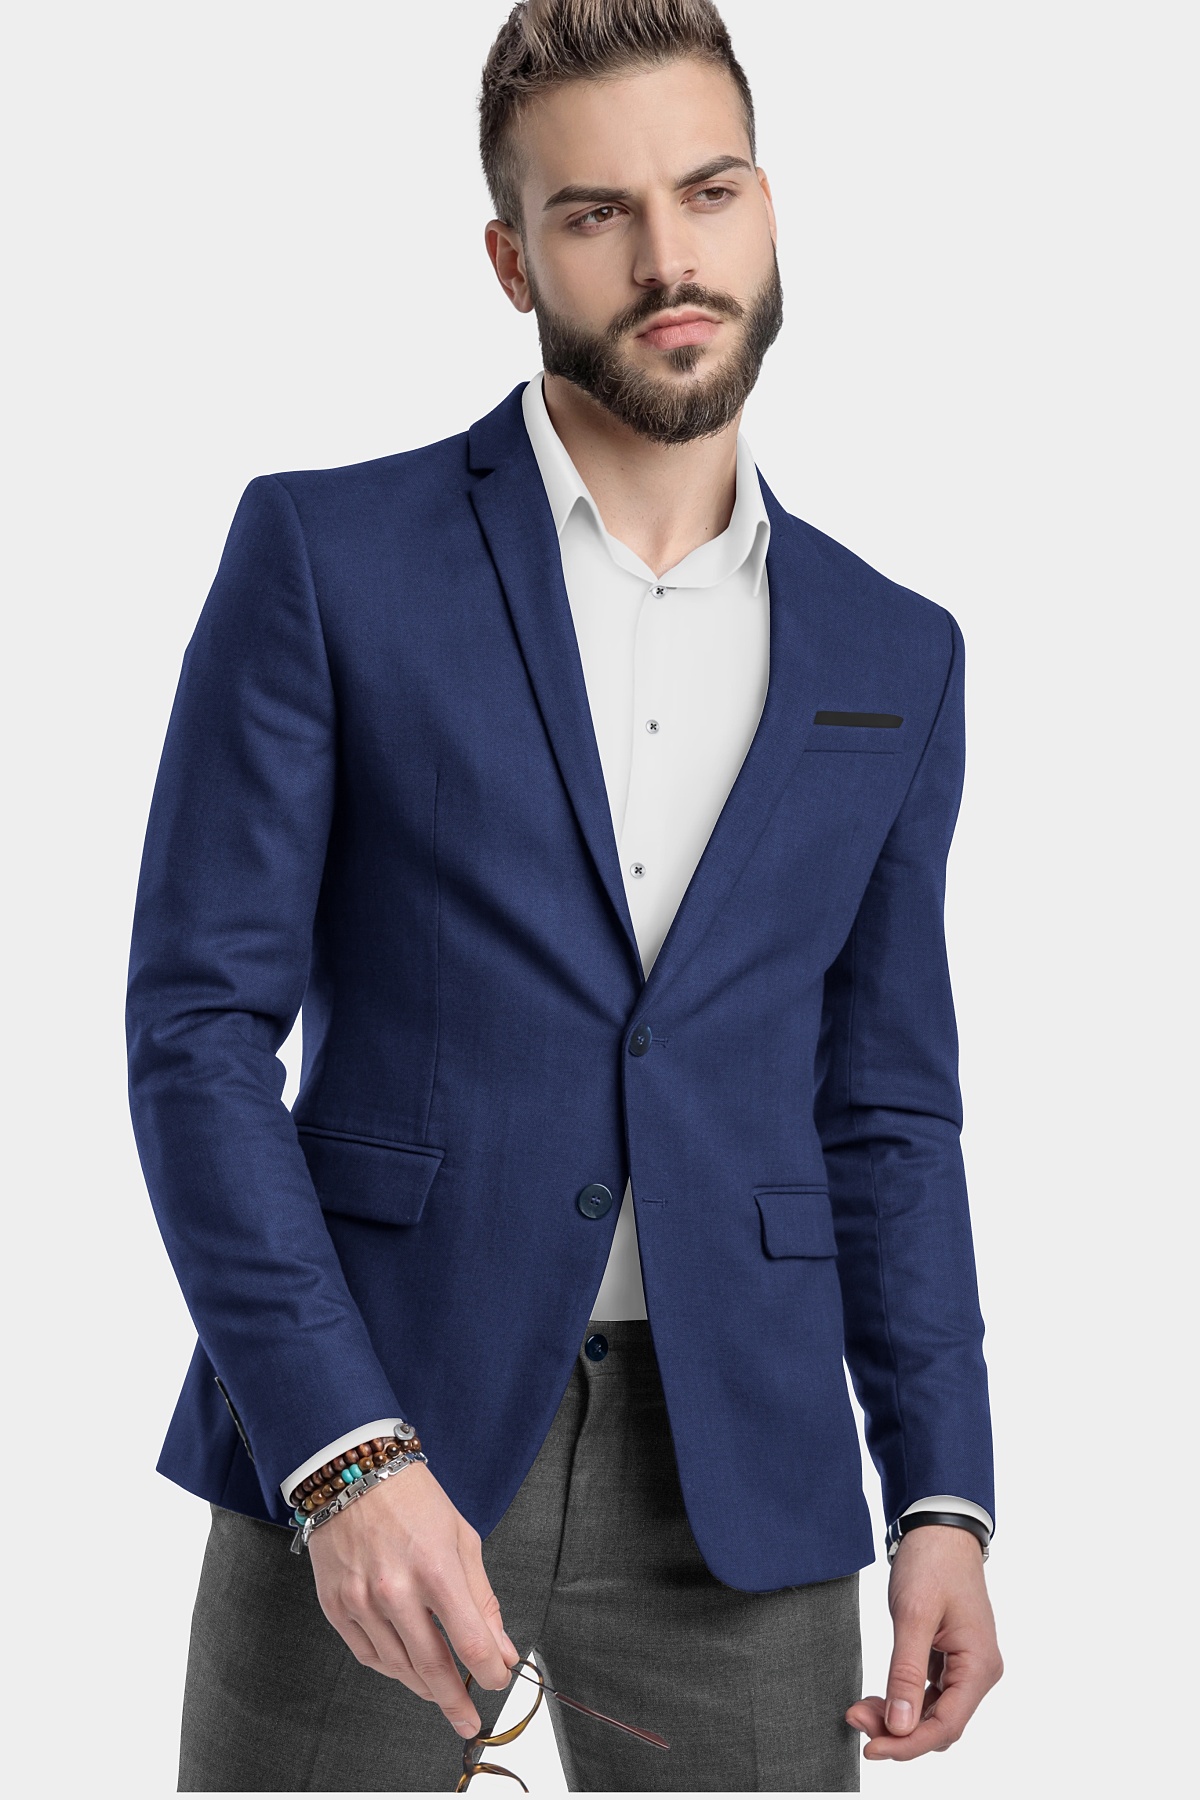 Men’s Navy Blue Formal Blazer